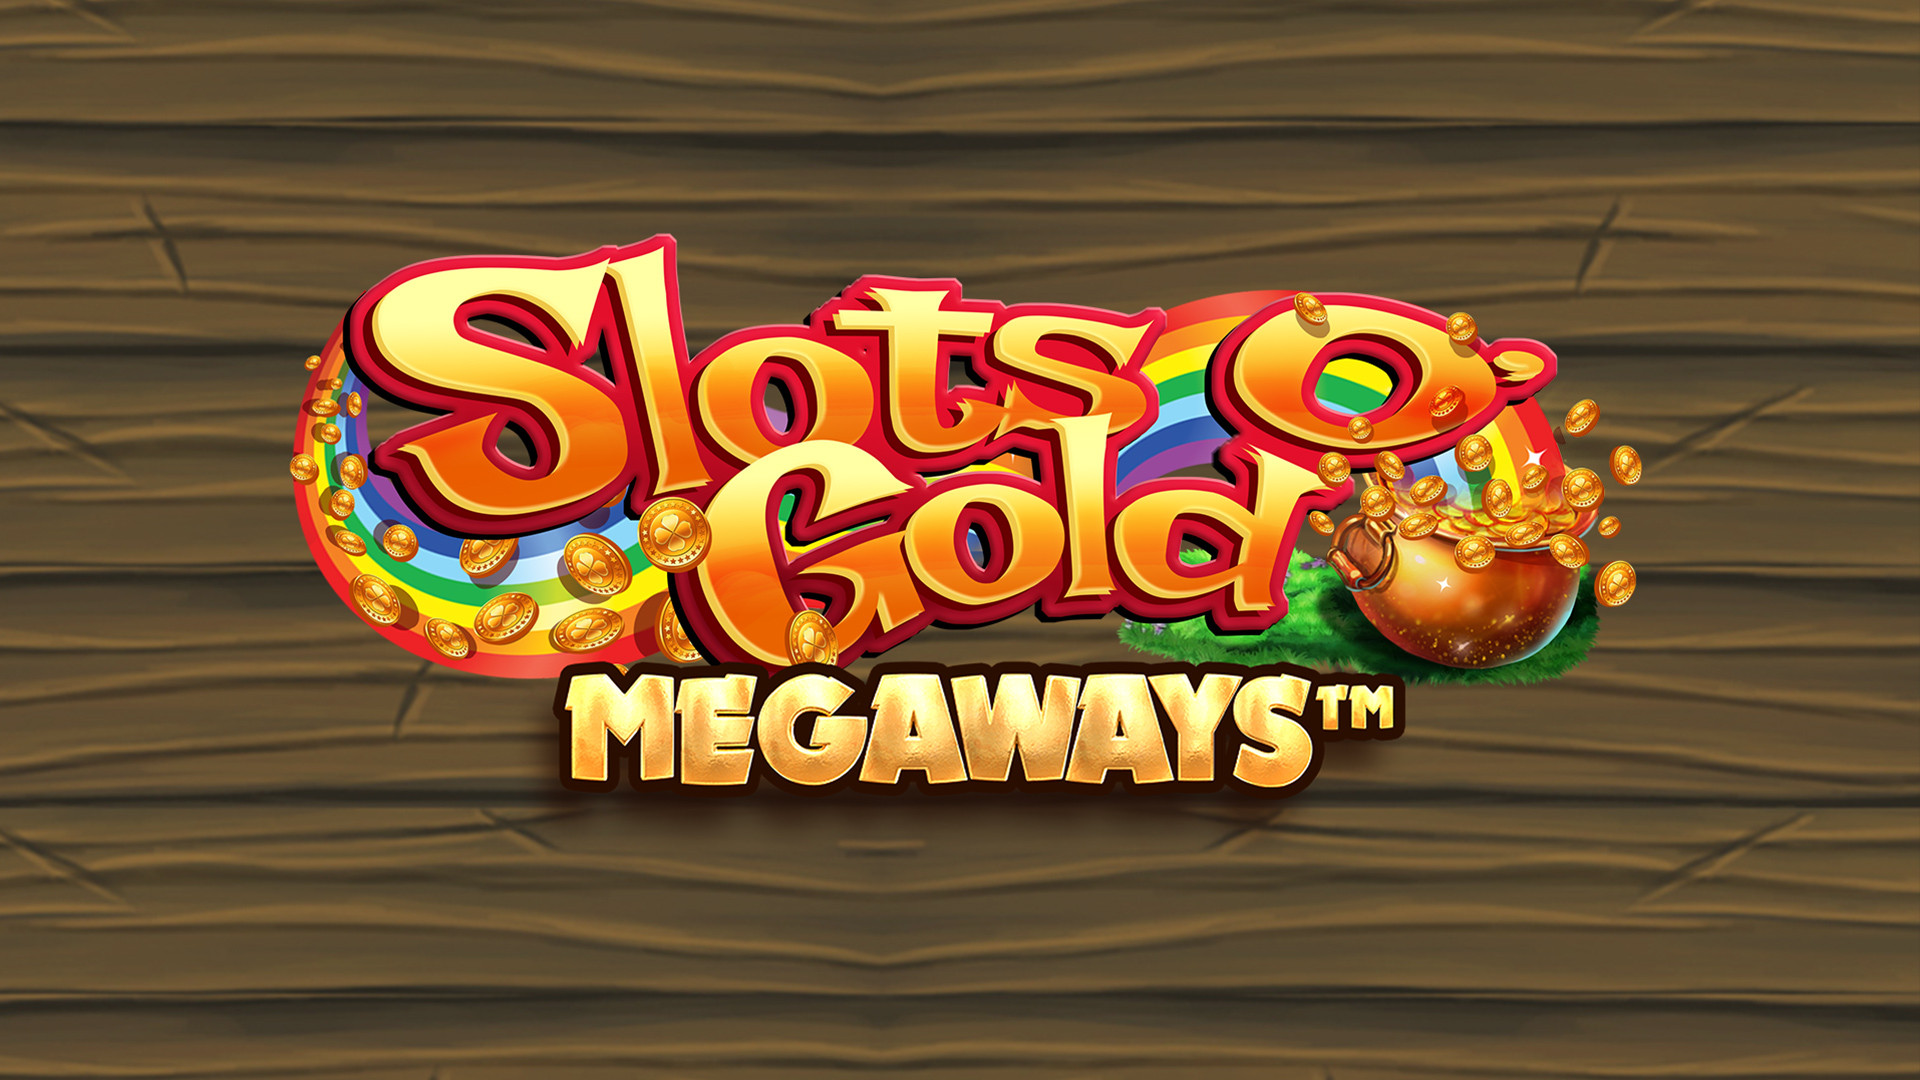 Slots O' Gold MEGAWAYS